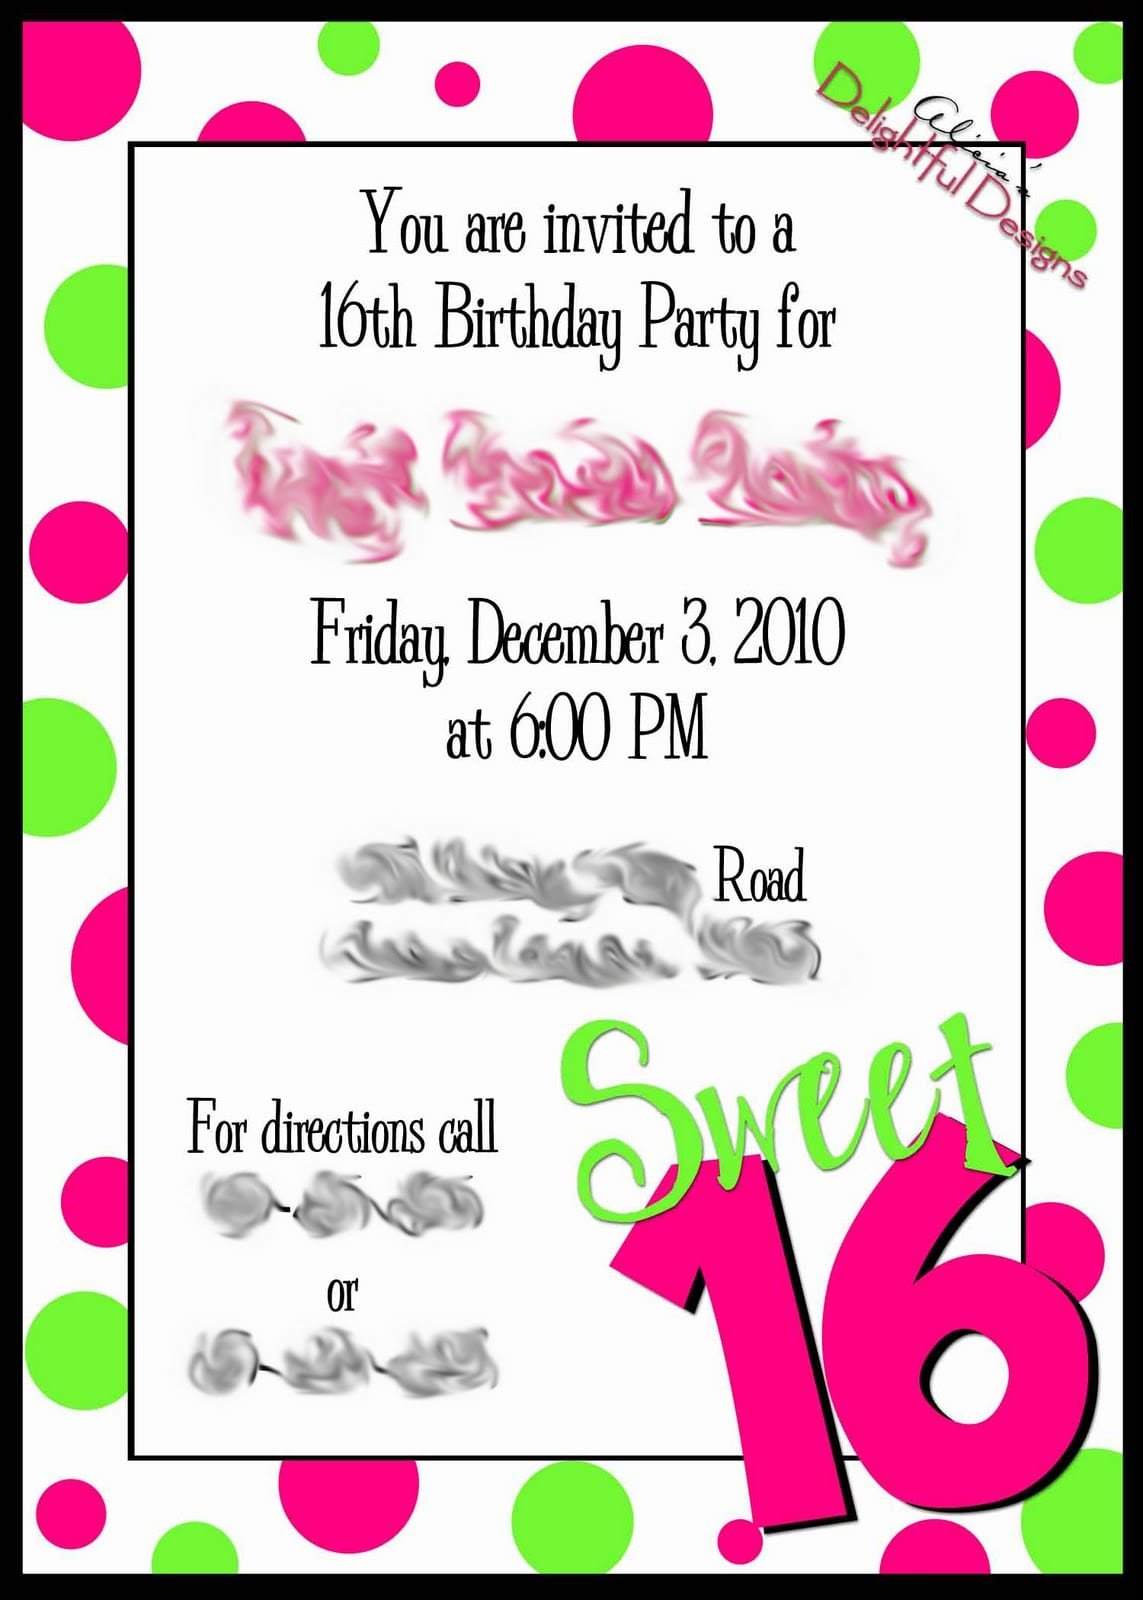 16th Birthday Party Invitations â Fleeciness Info